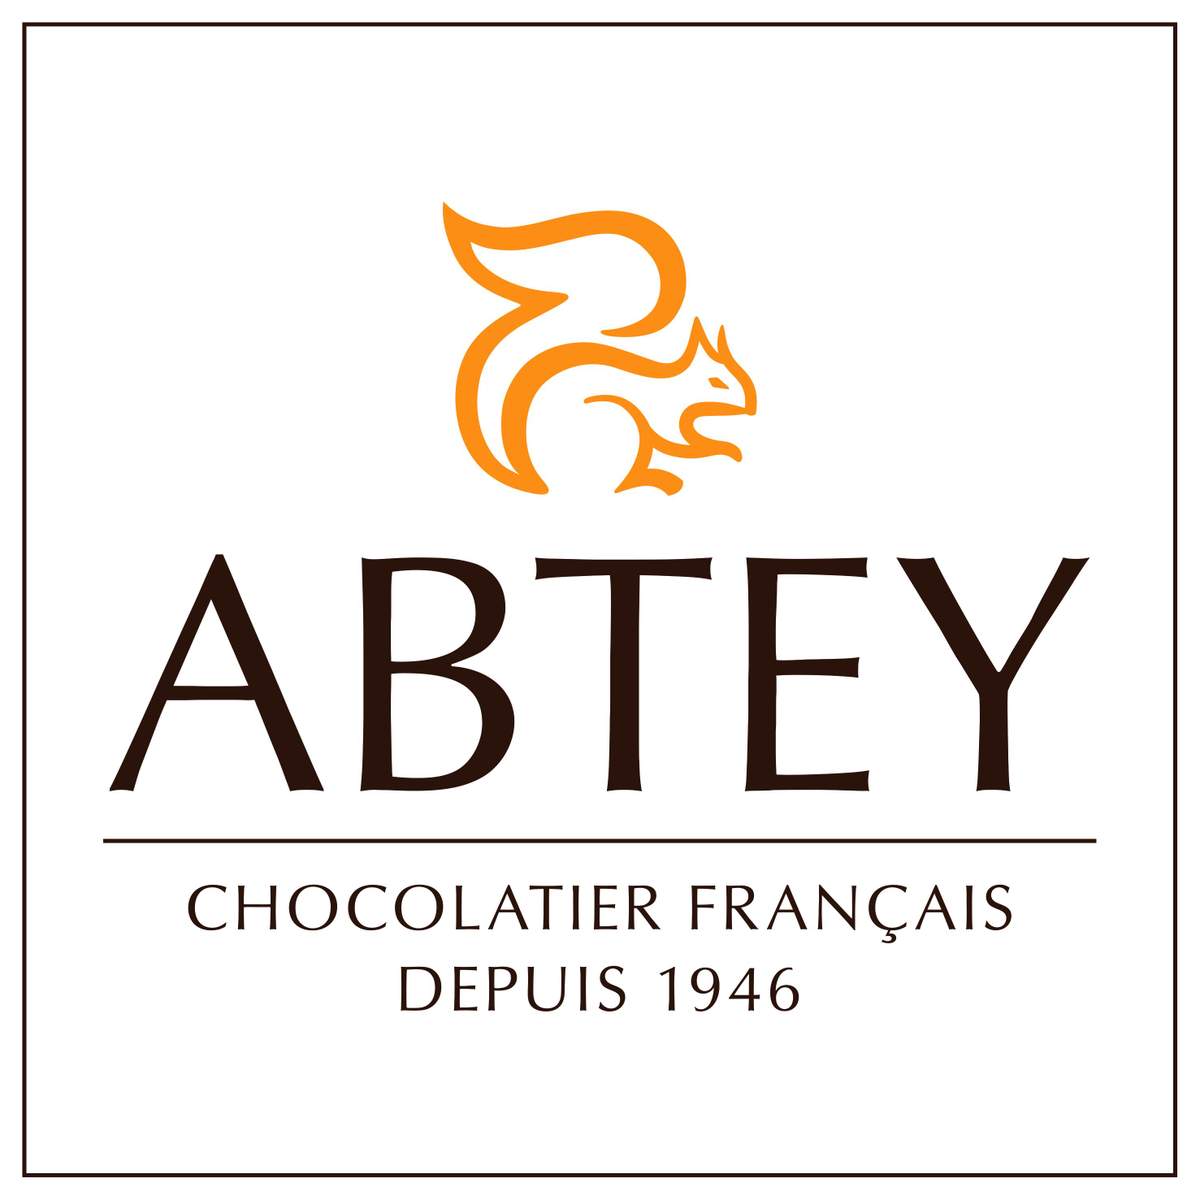 Abtey chocolaterie